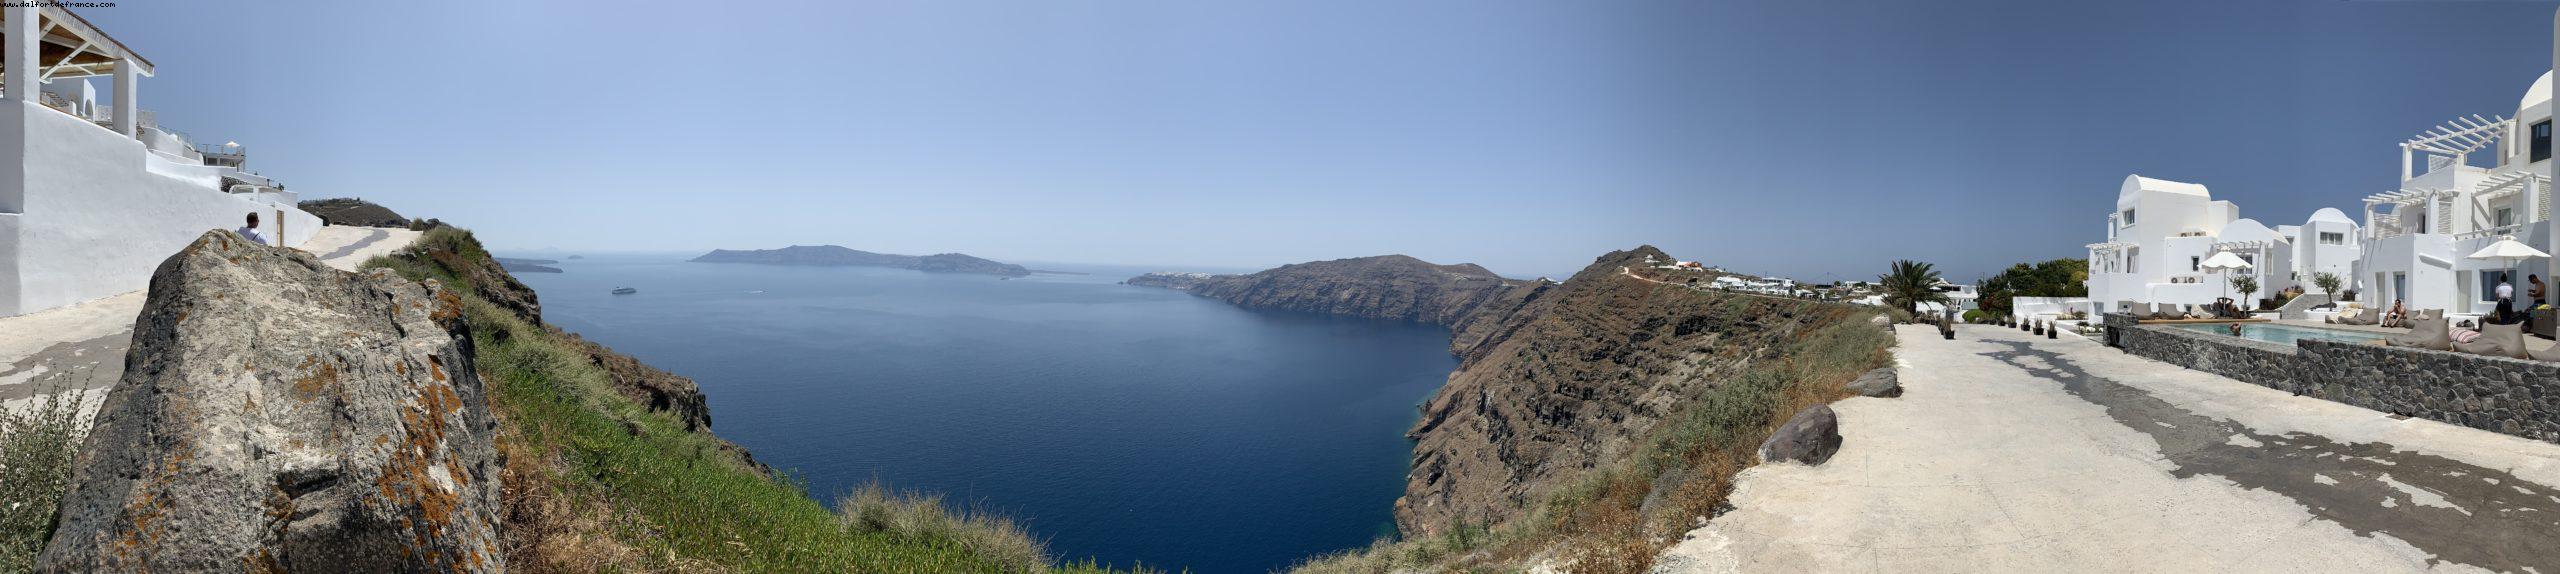 4627 Hiking From Oia to Fira - Santorini - 2nd The Cruise (aka La Demence) - Rhapsody of the Seas